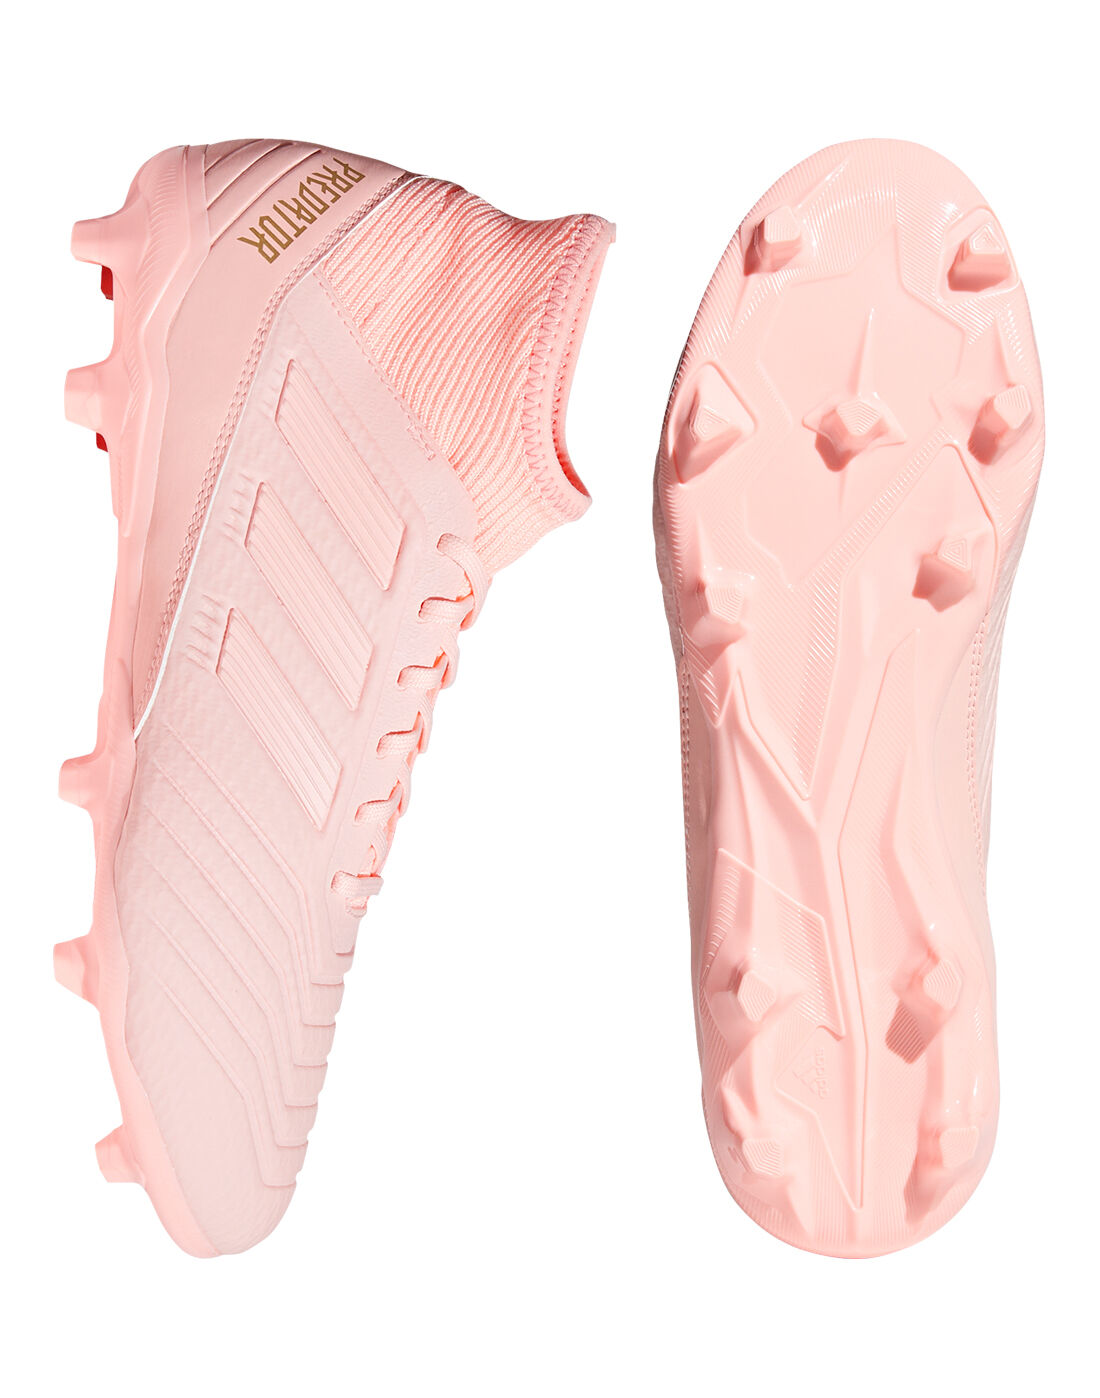 adidas predator 18.3 fg pink